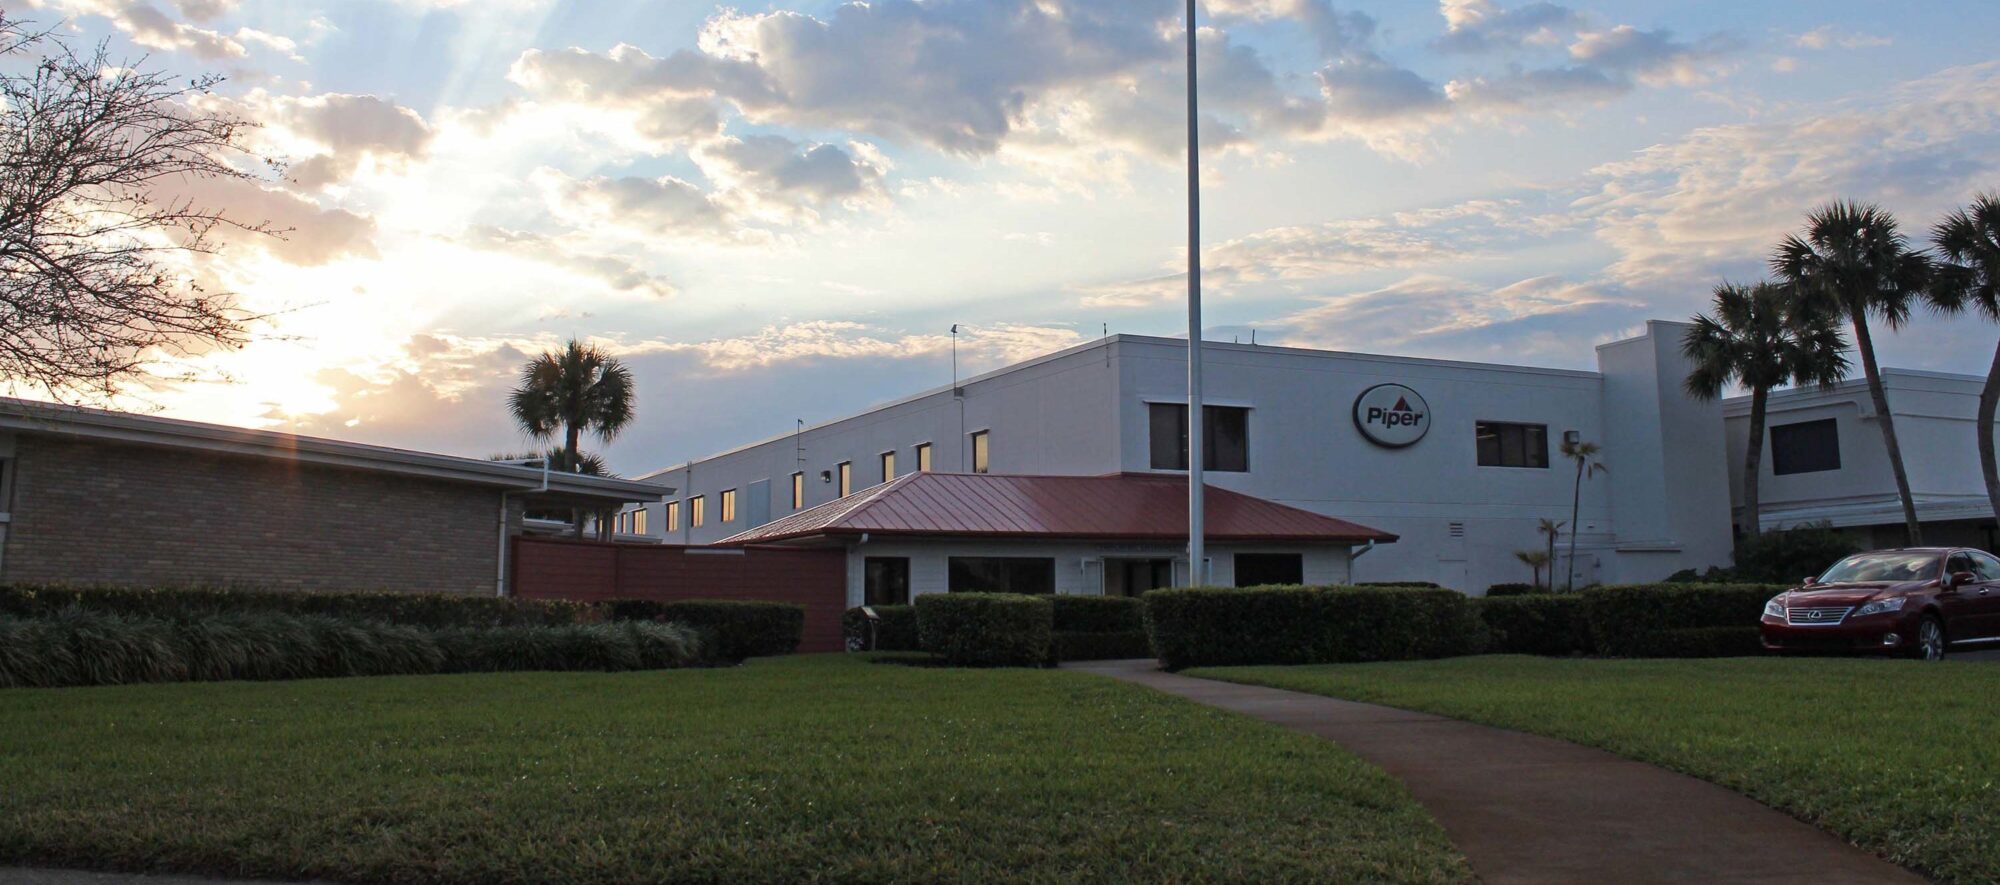 Piper Aircraft Headquarters